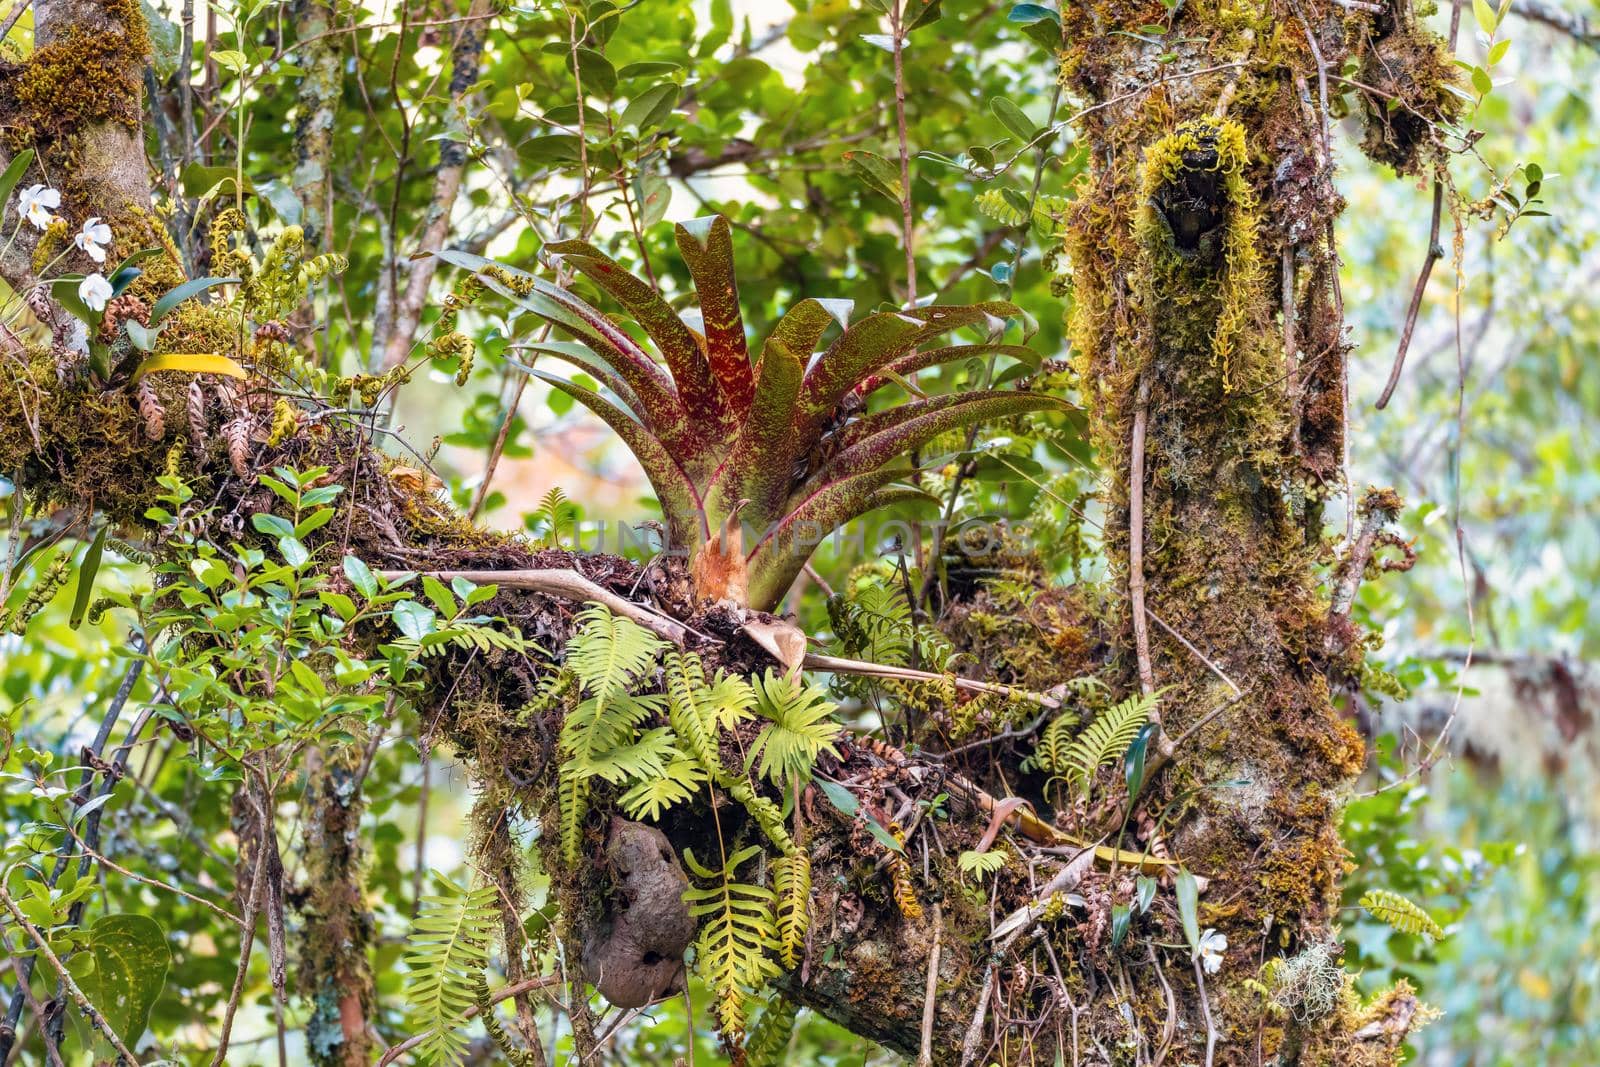 beautiful flower Bromeliad on a tree branch. San Gerardo de Dota, Costa Rica